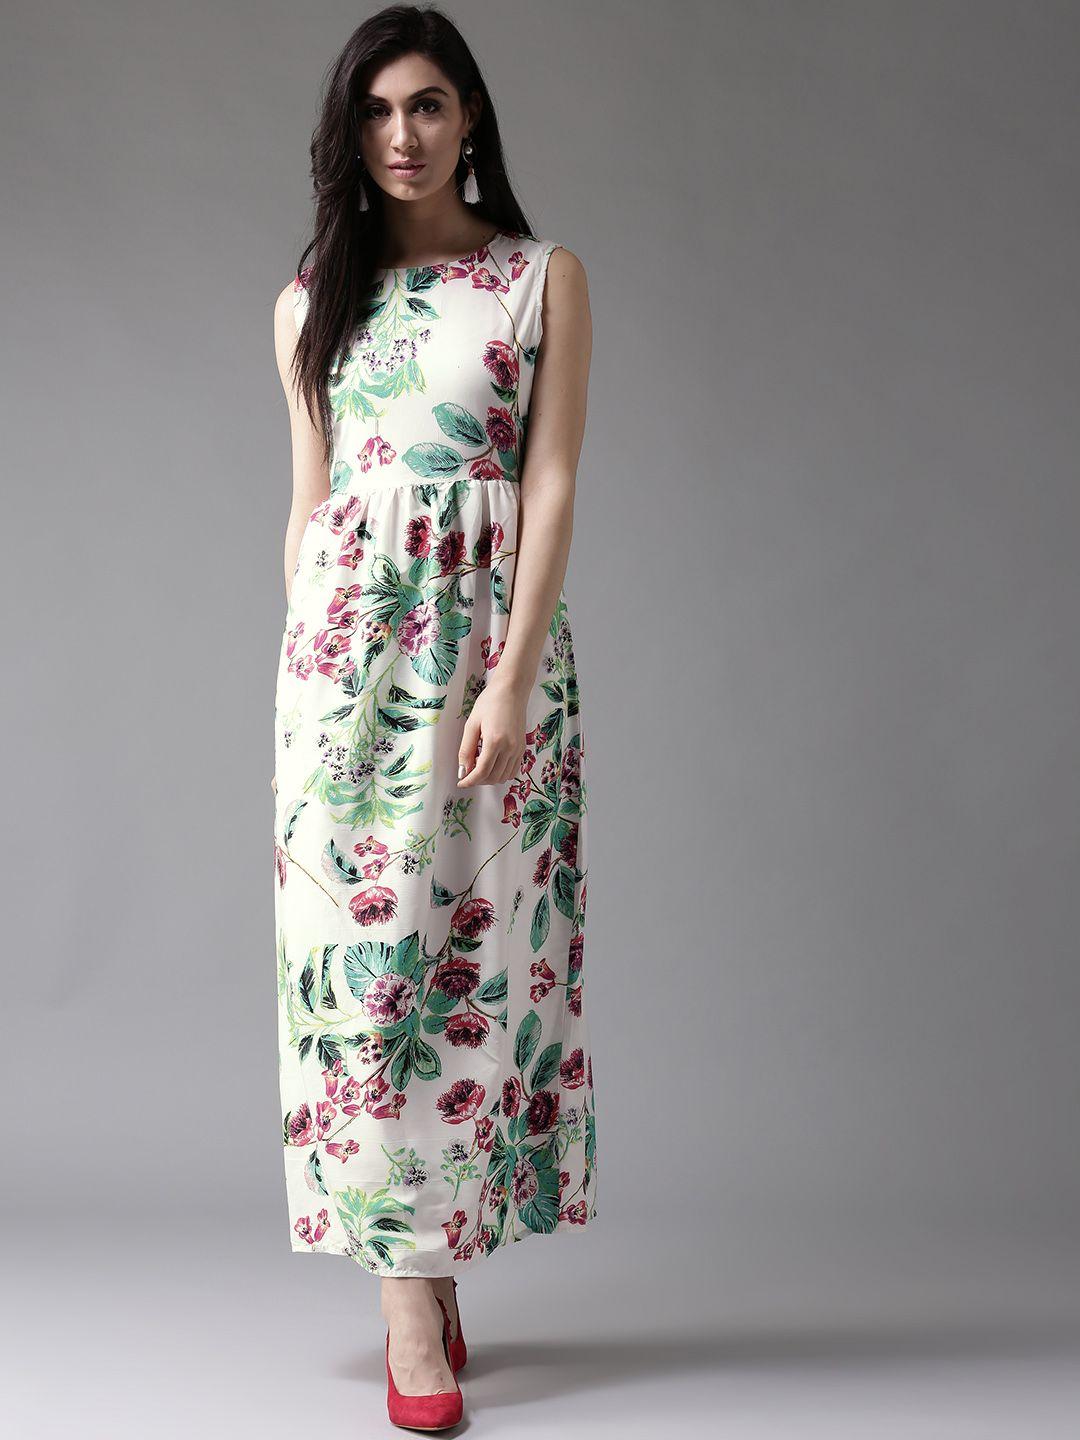 here&now-women-white-&-green-floral-print-maxi-dress